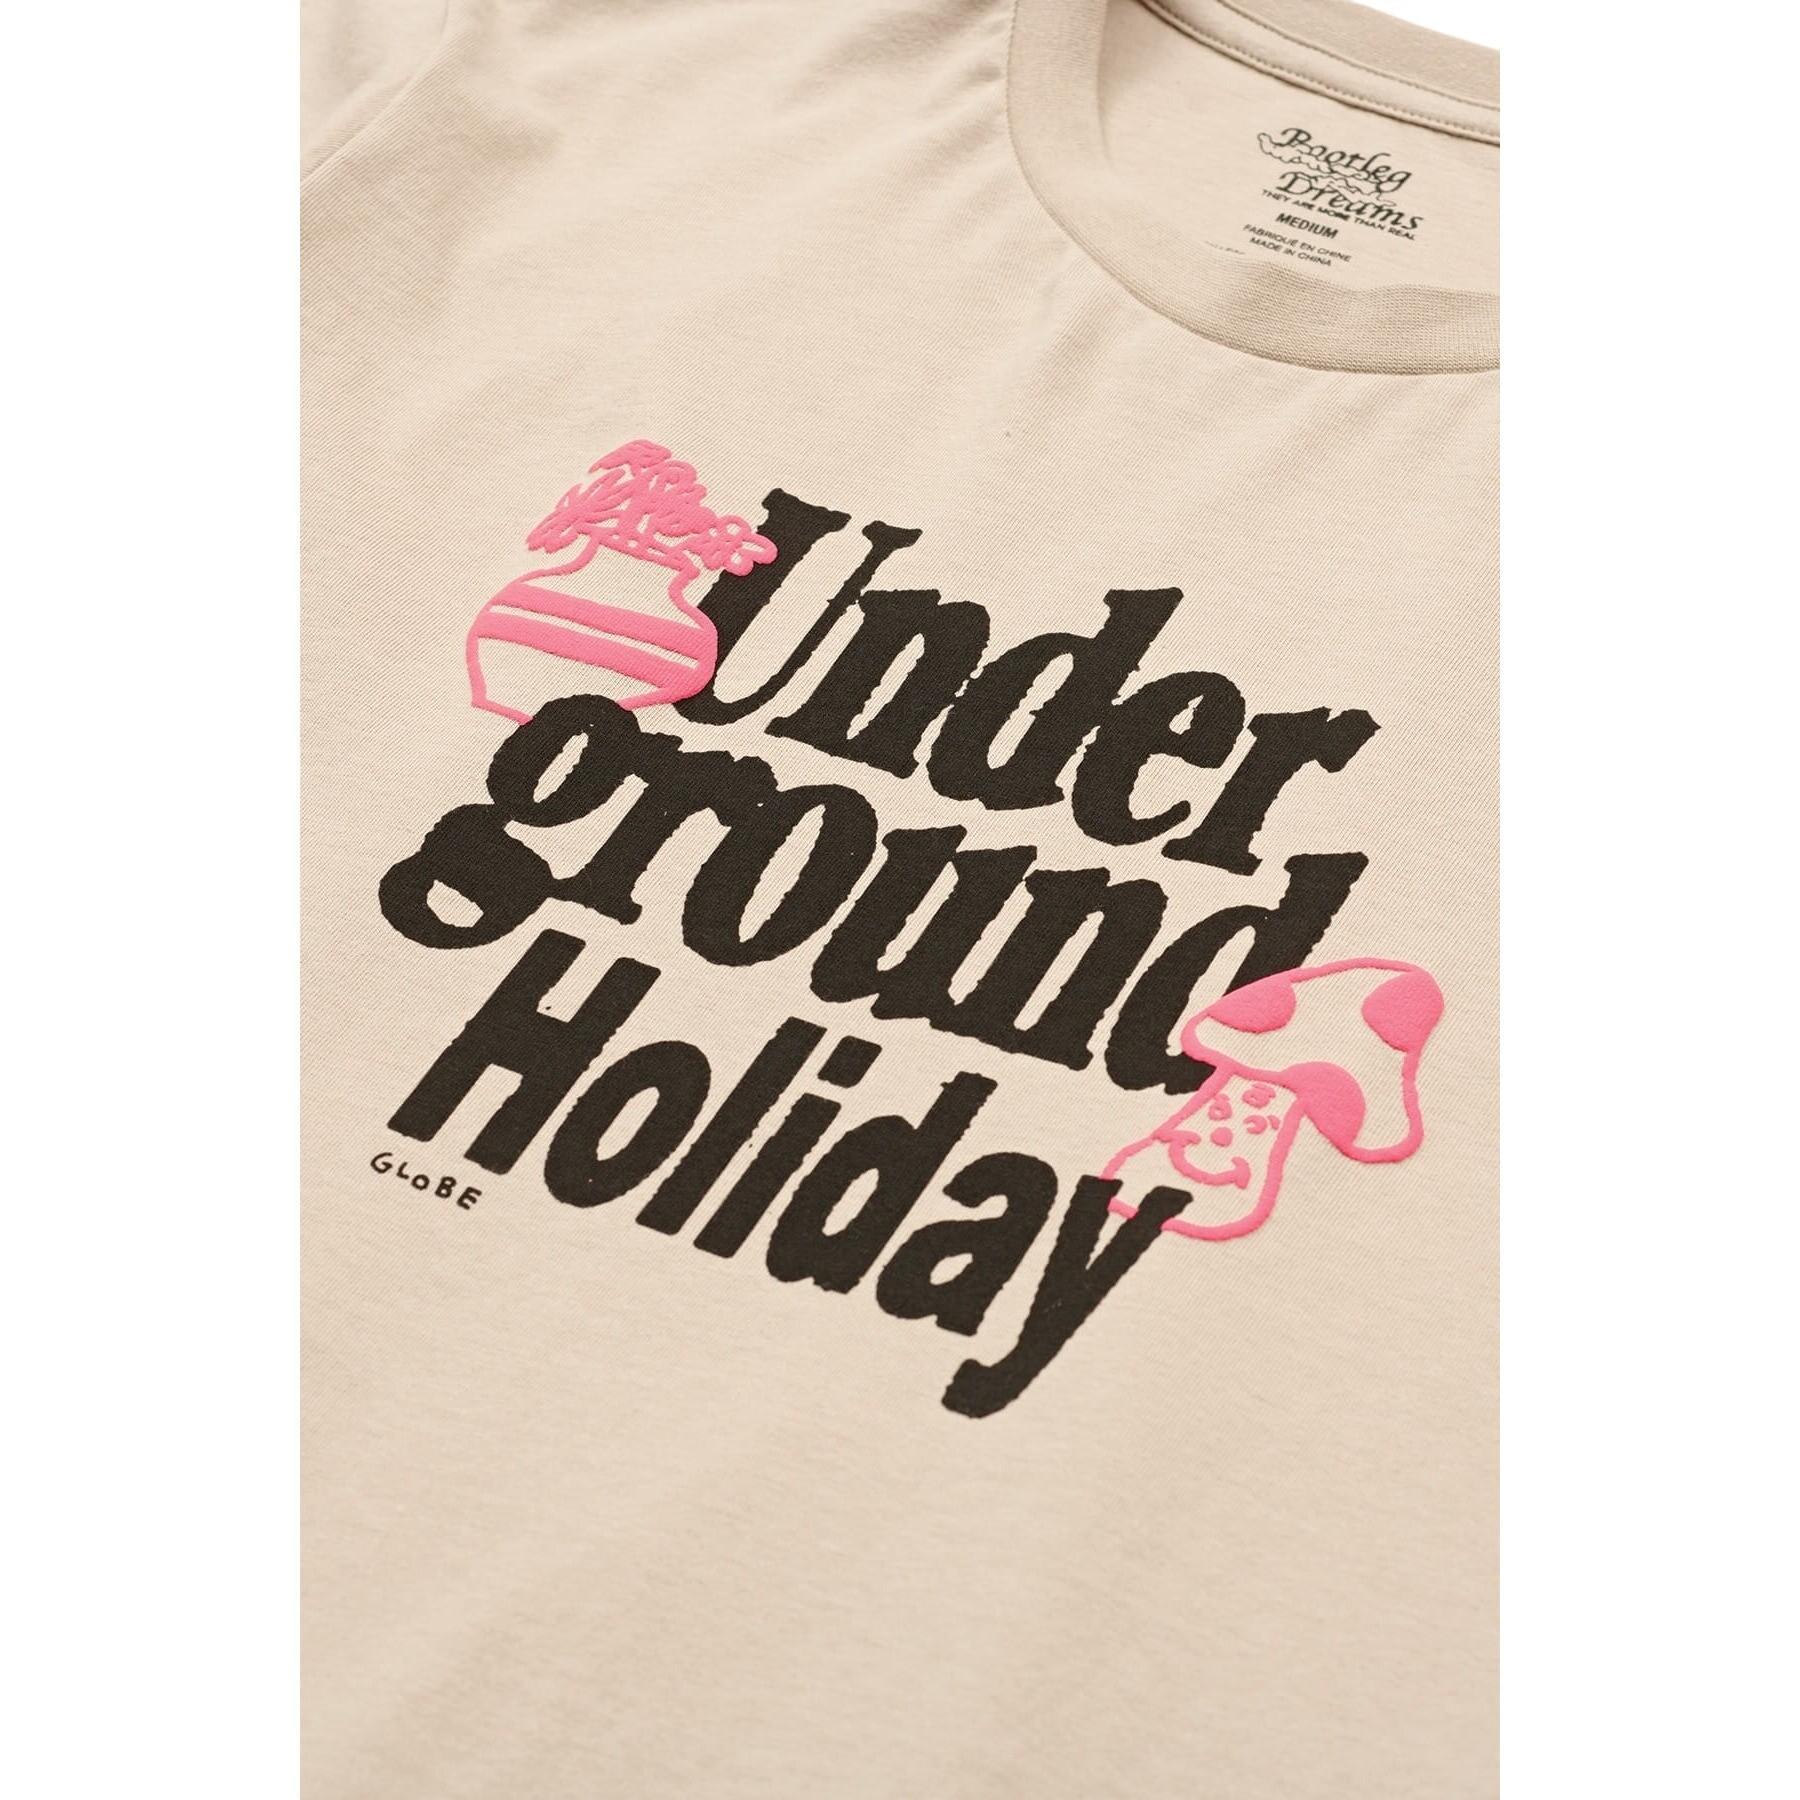 T-shirt Globe Underground Holiday